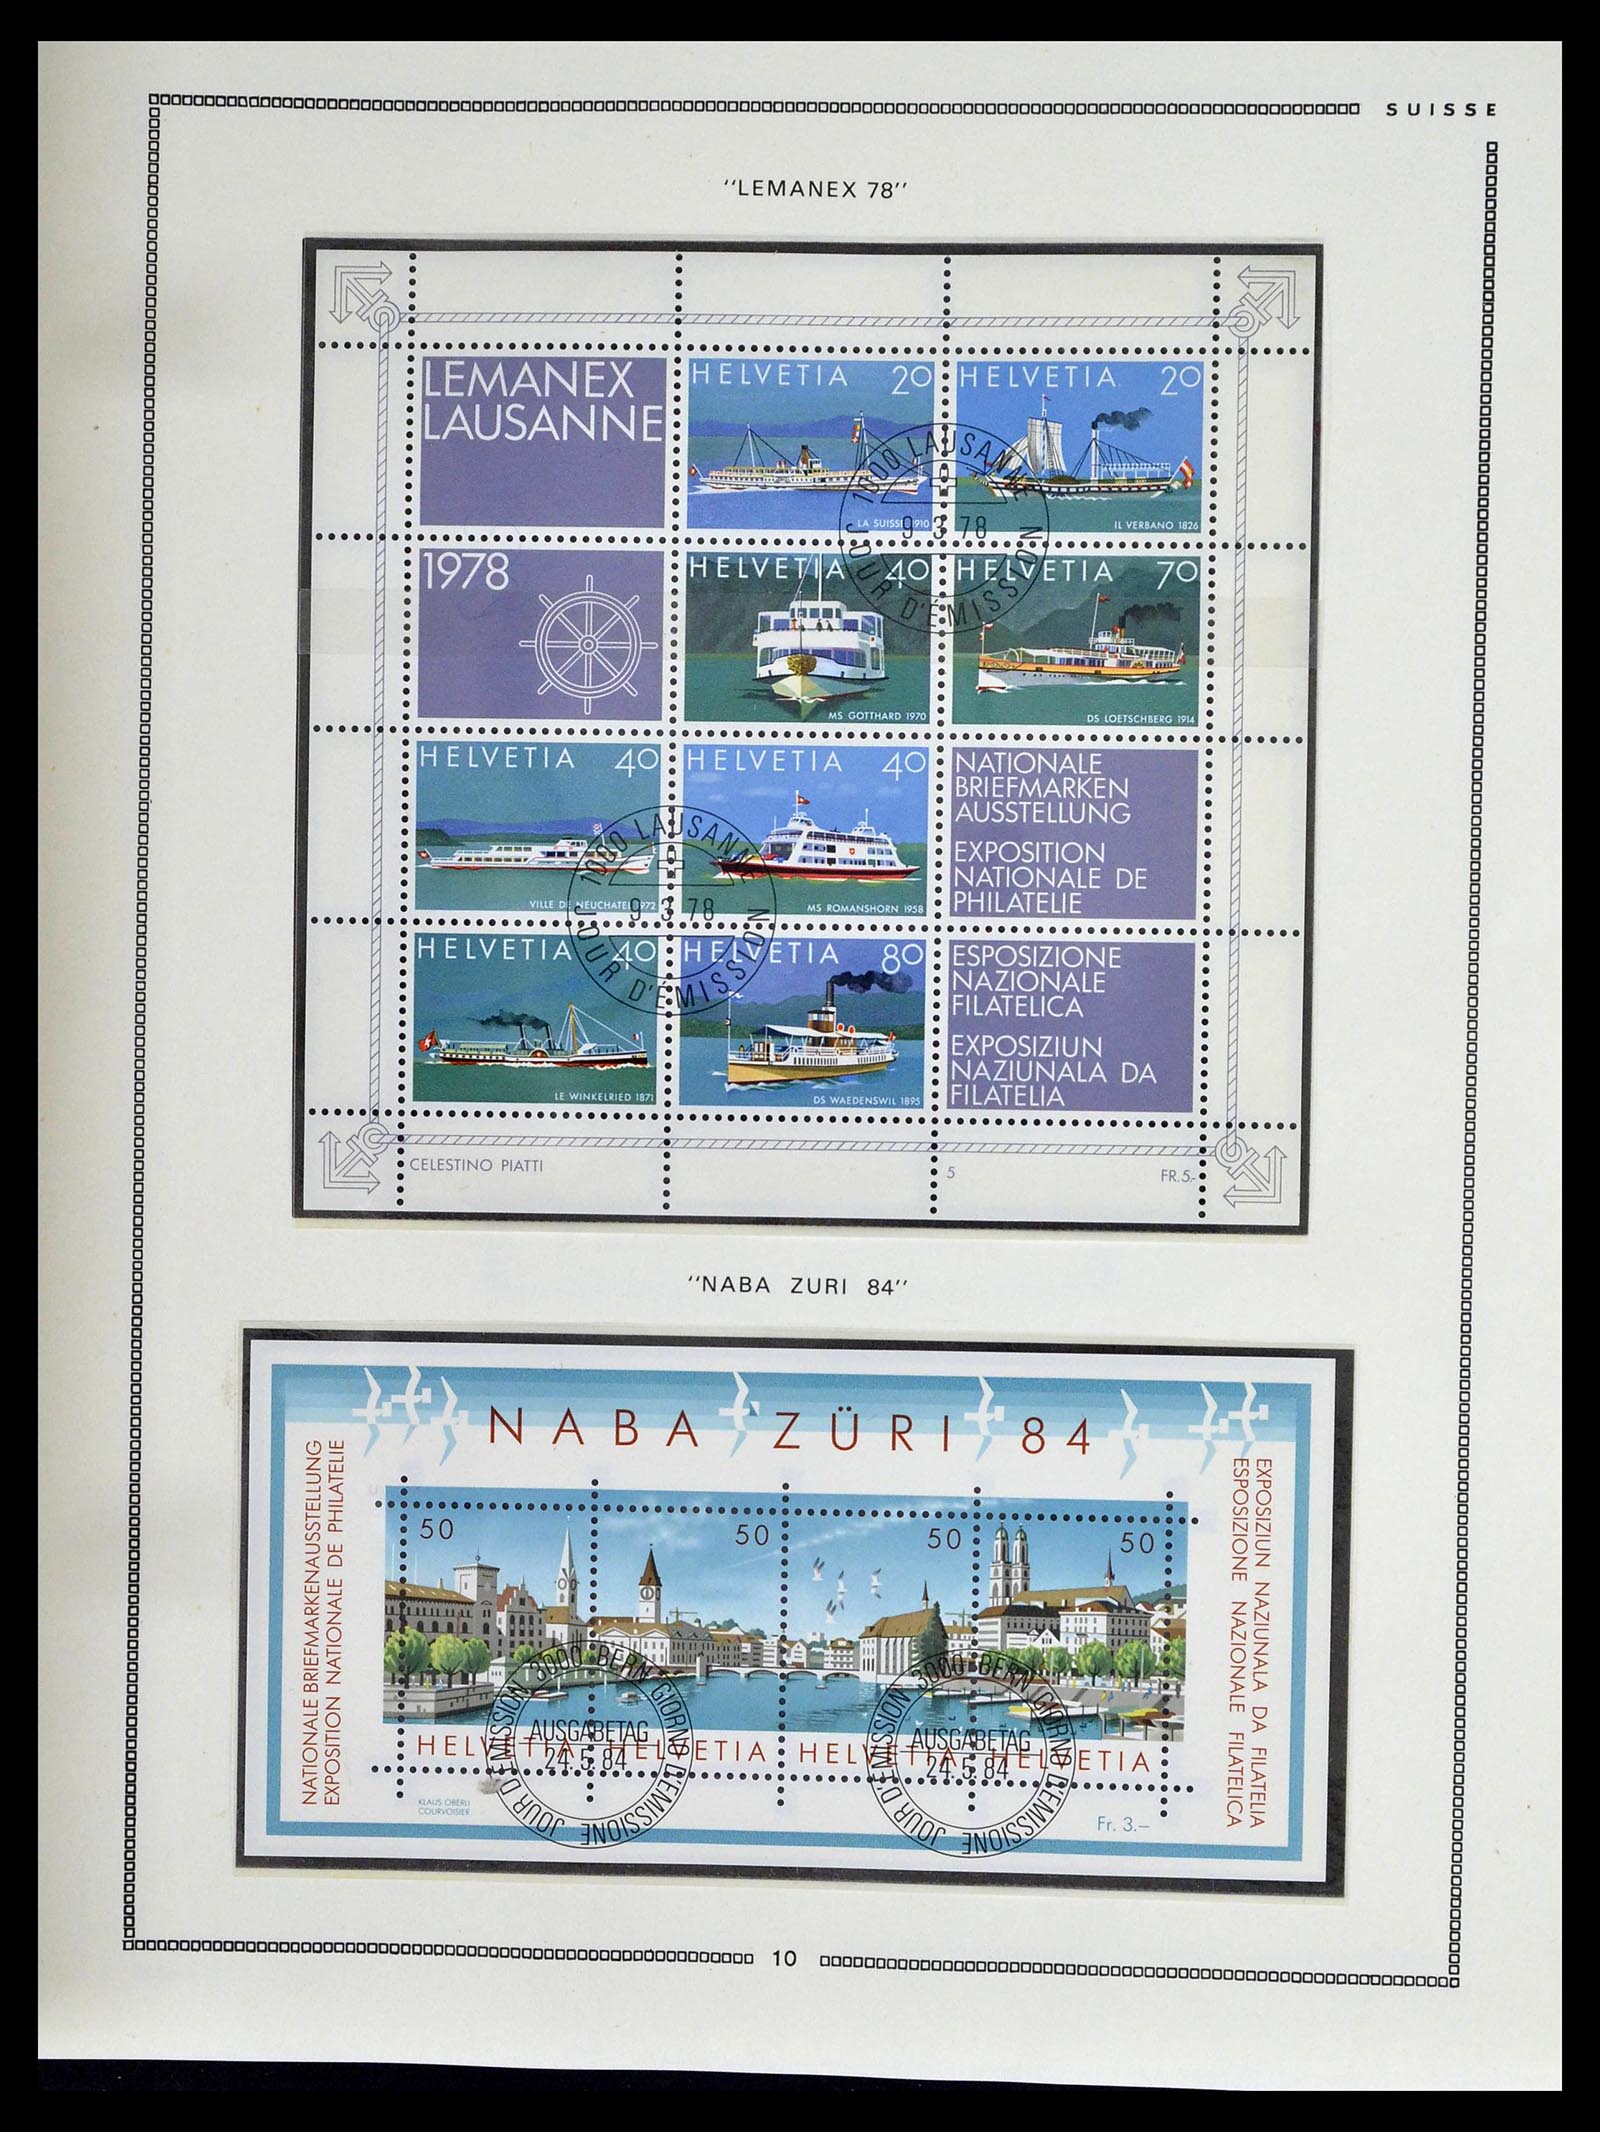 39094 0164 - Stamp collection 39094 Switzerland 1850-2005.